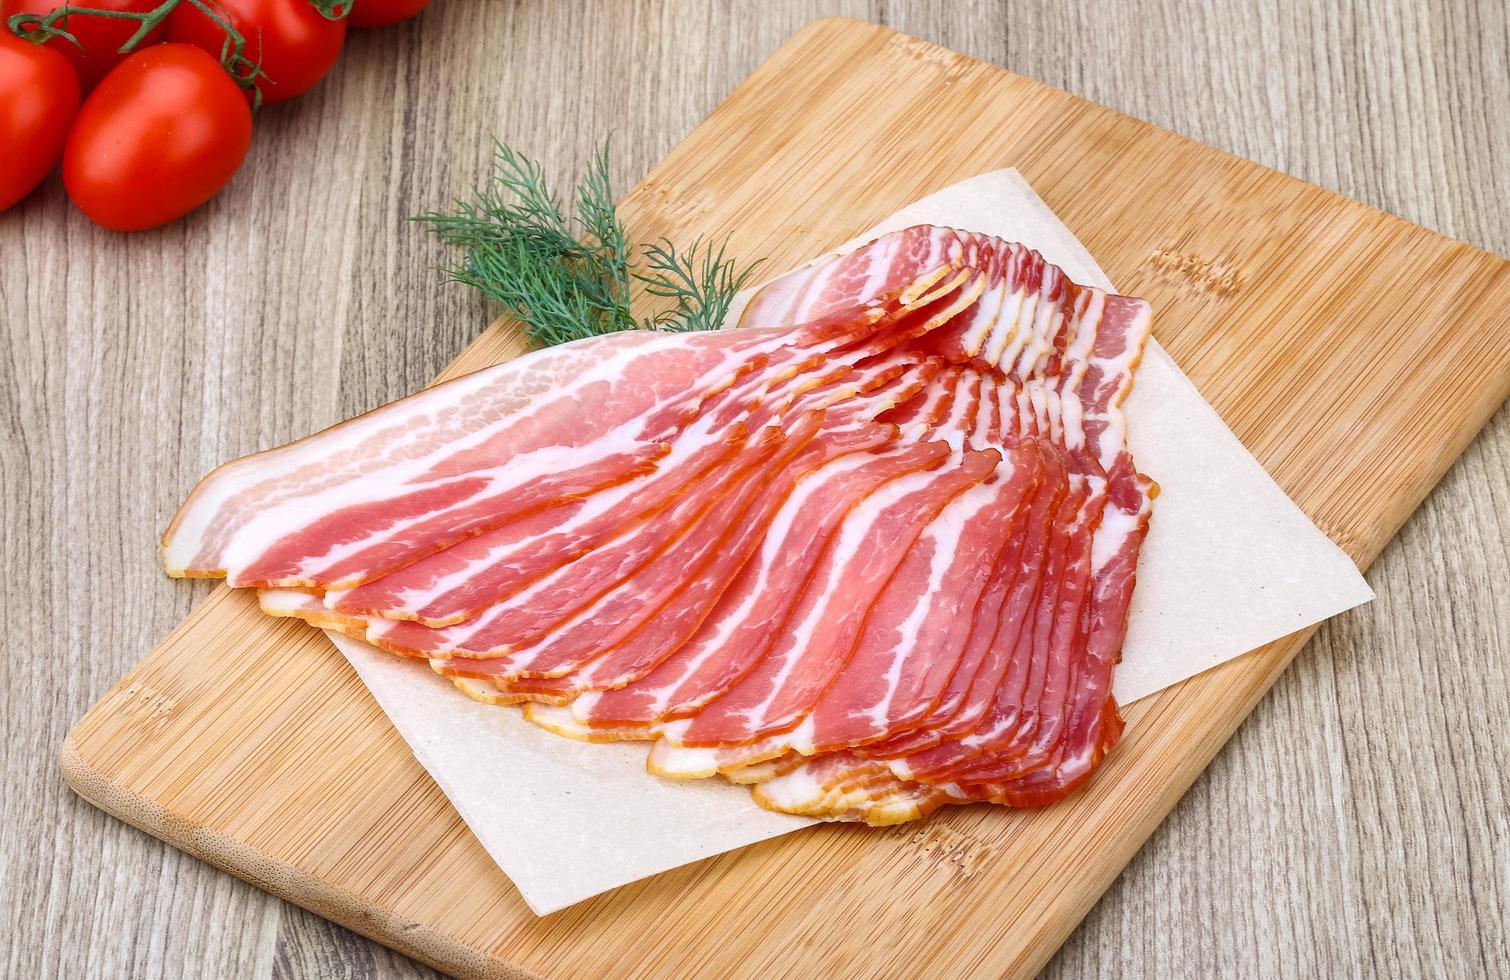 tranches de bacon sur bois photo